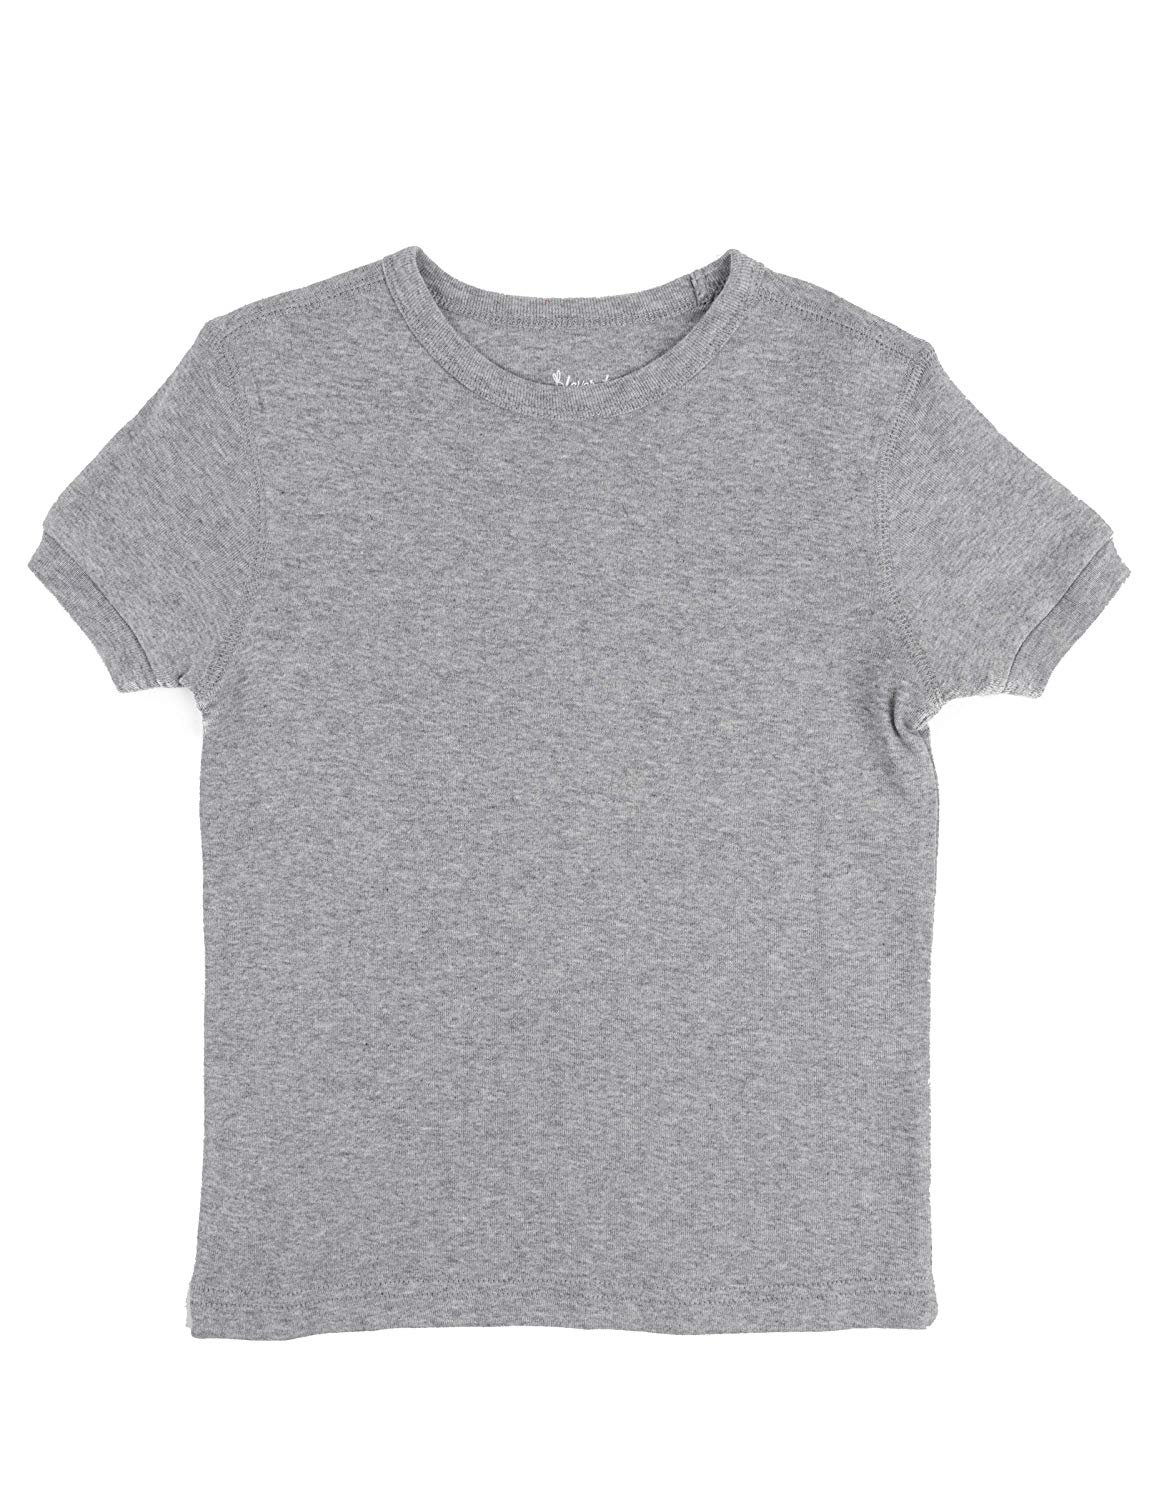 Leveret Short Sleeve Top Boys Girls Kids T-Shirt 100% Cotton (Dark Grey,Size 6 Years) - image 3 of 10